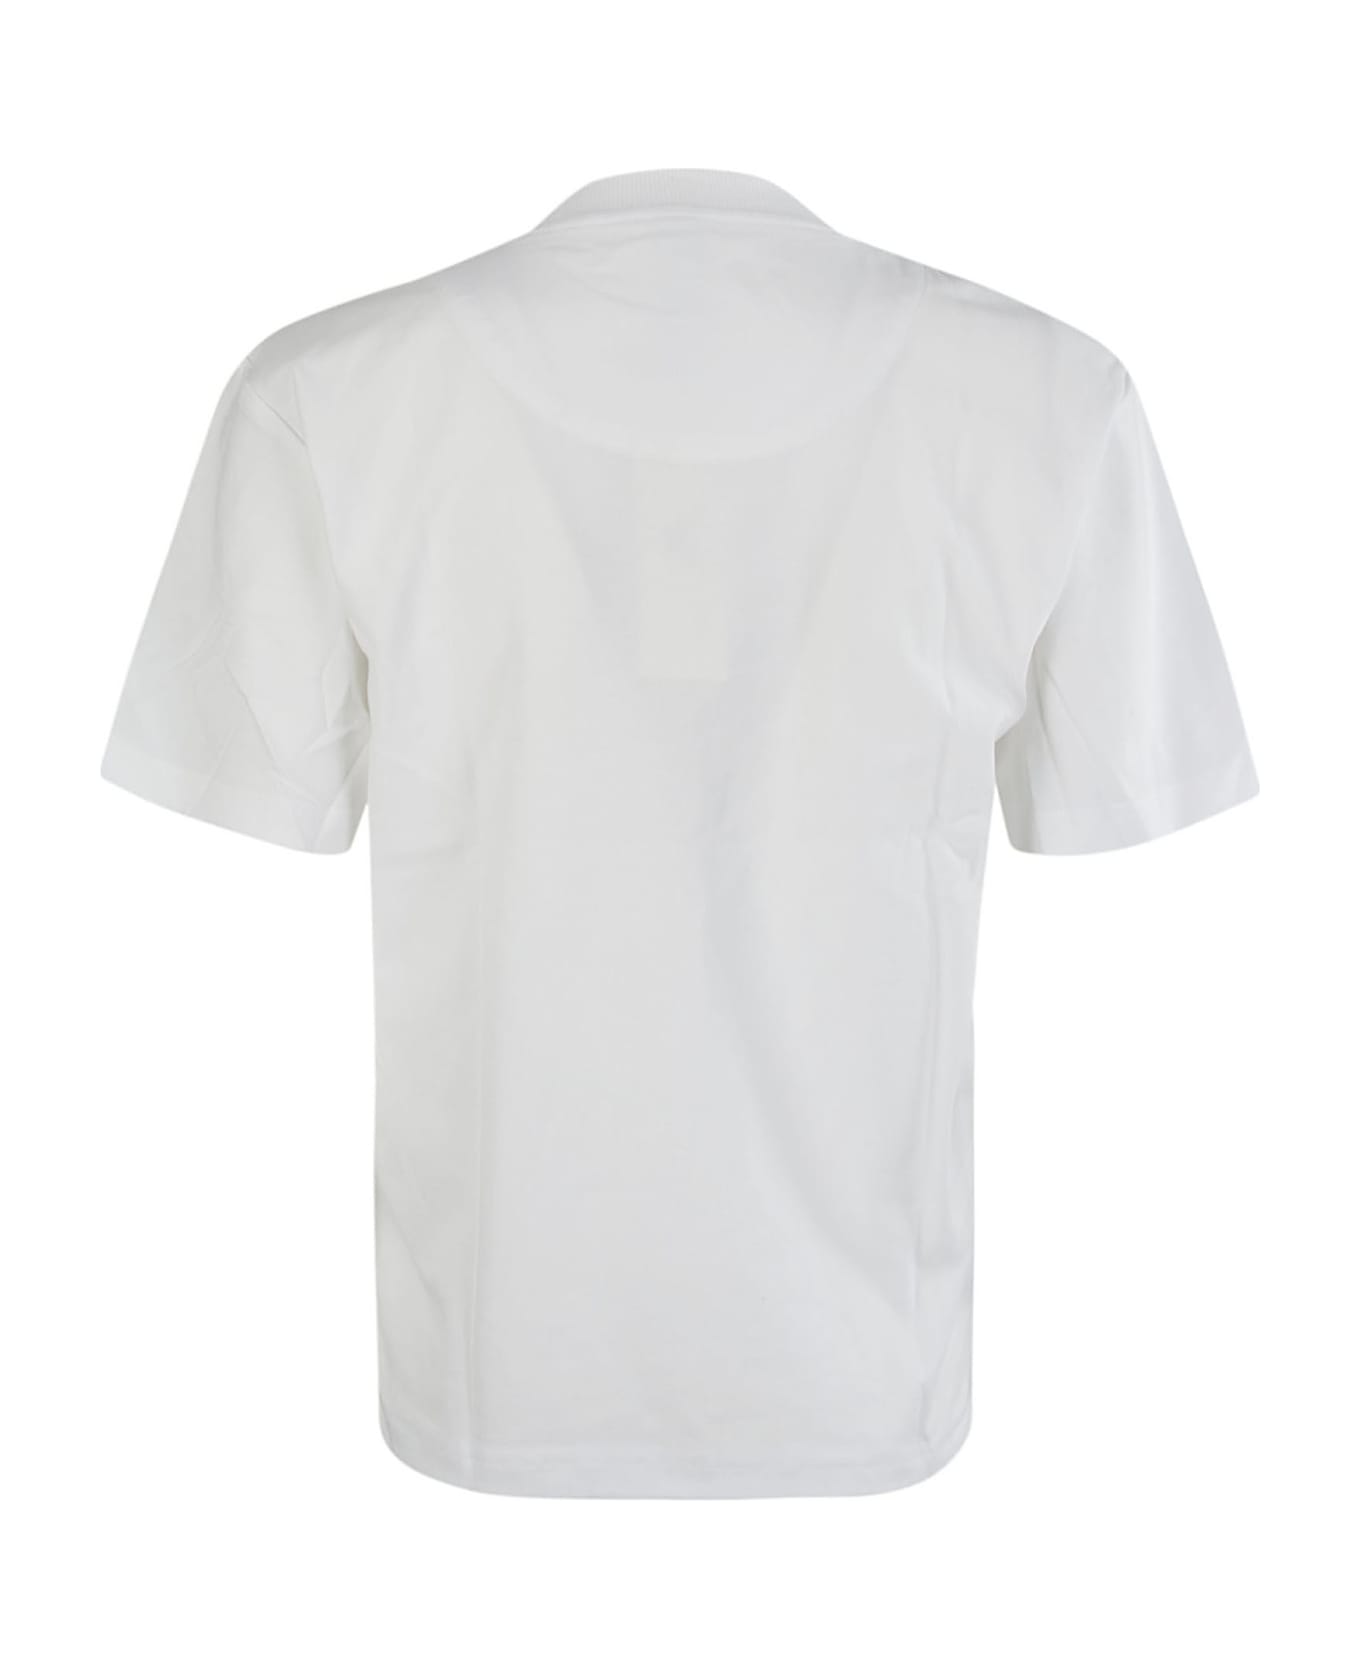 Adidas by Stella McCartney T-shirt Hr9167 - WHITE Tシャツ